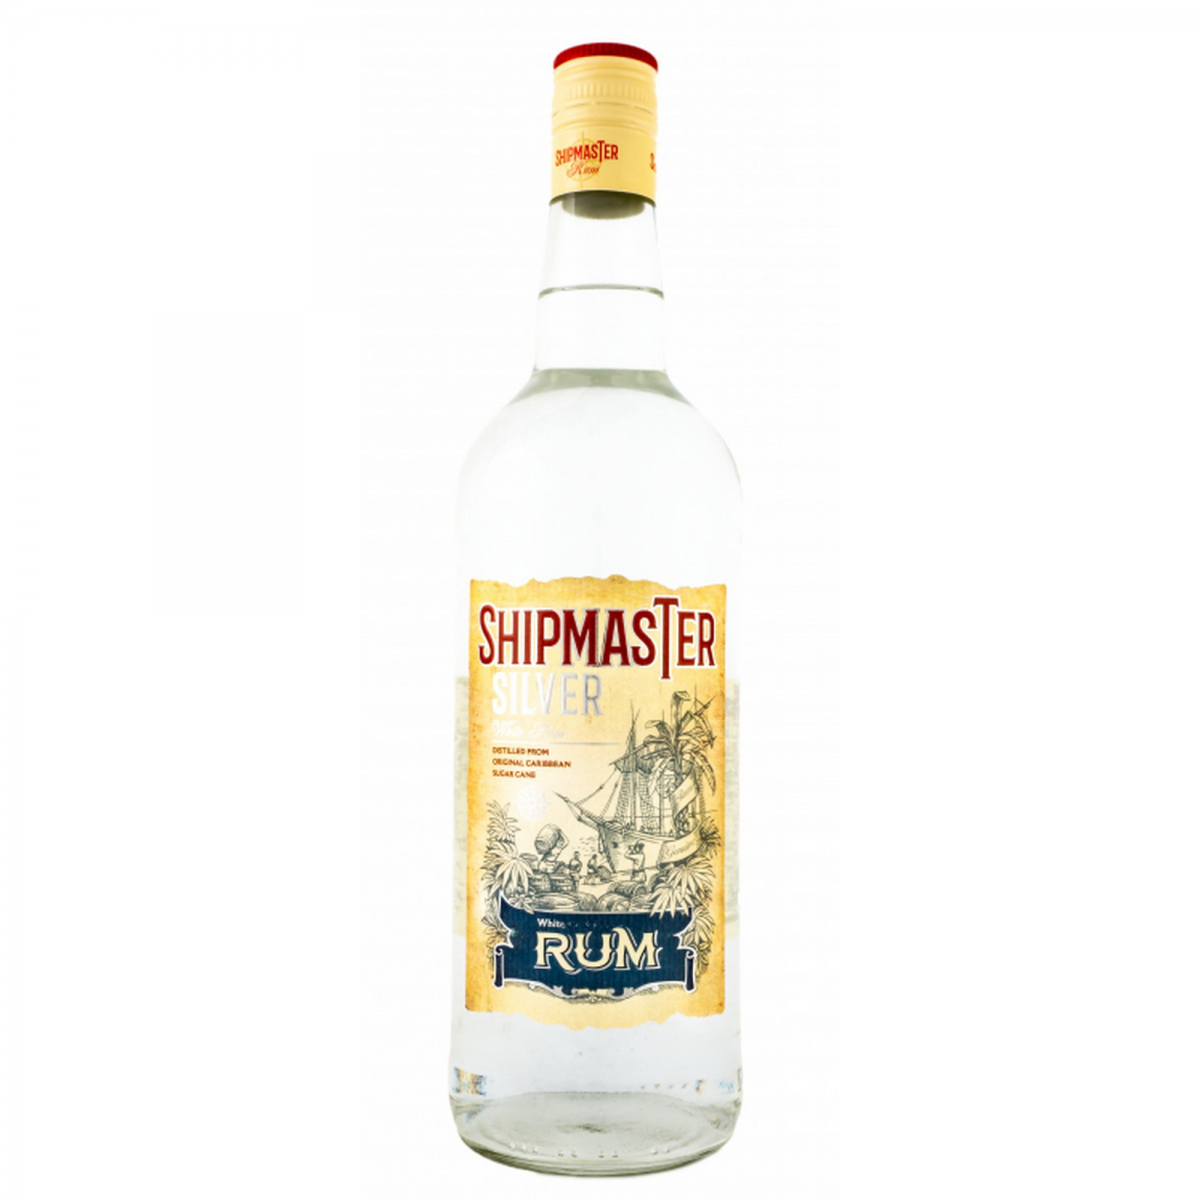 Rum Captain Silver L 07141 Garrafeira Soares